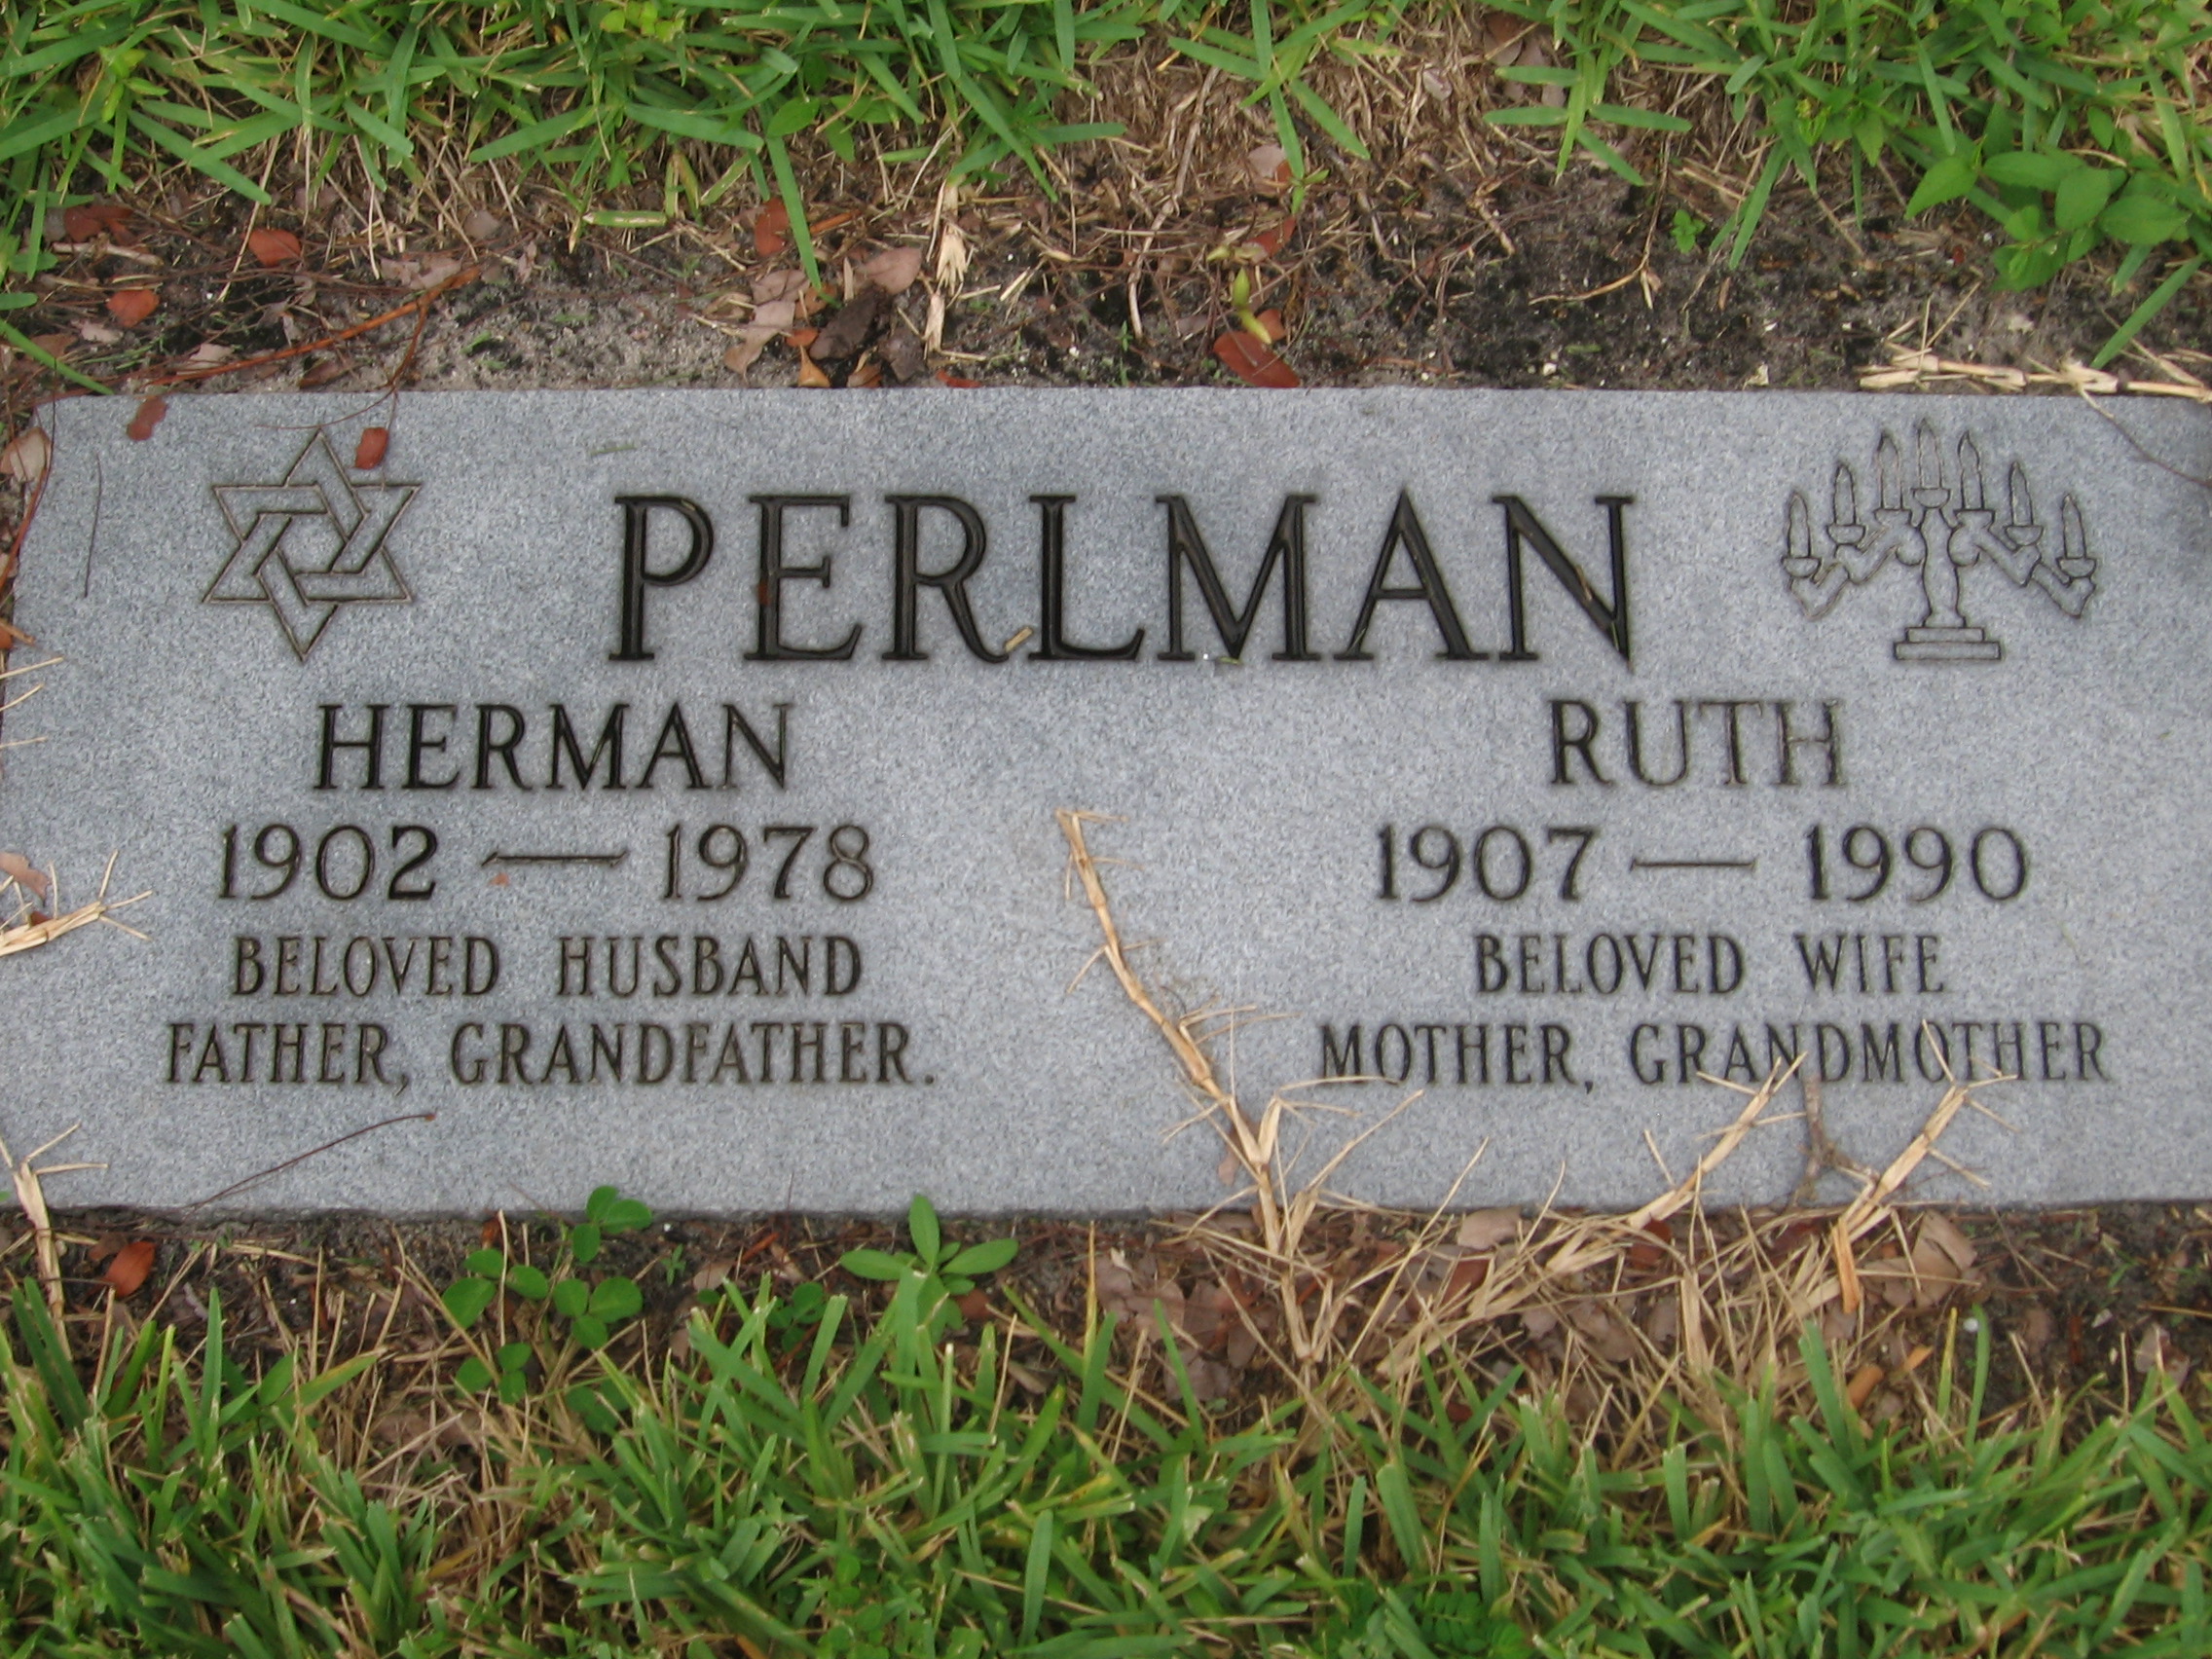 Ruth Perlman